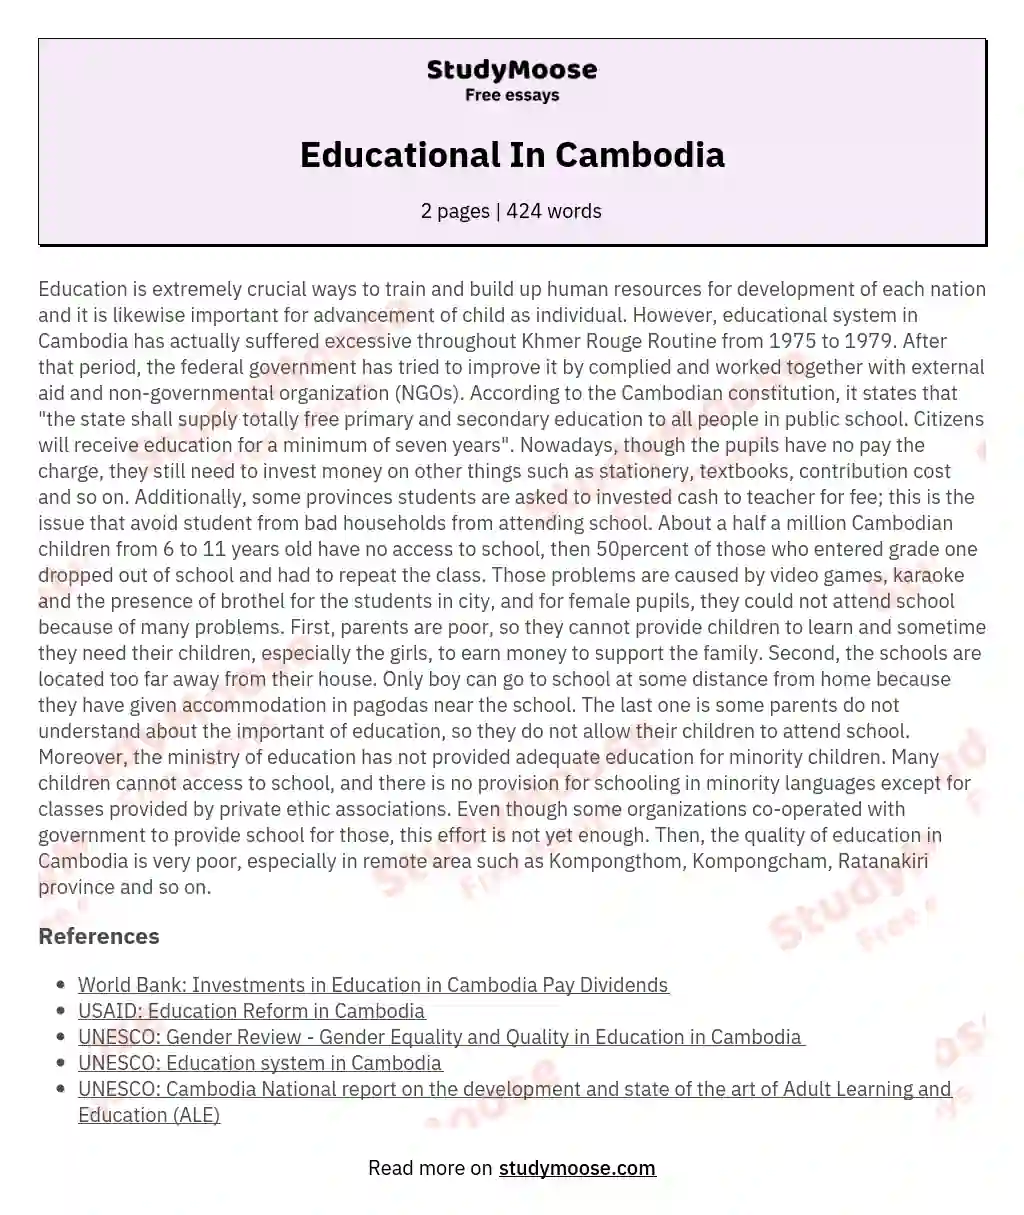 Educational In Cambodia essay